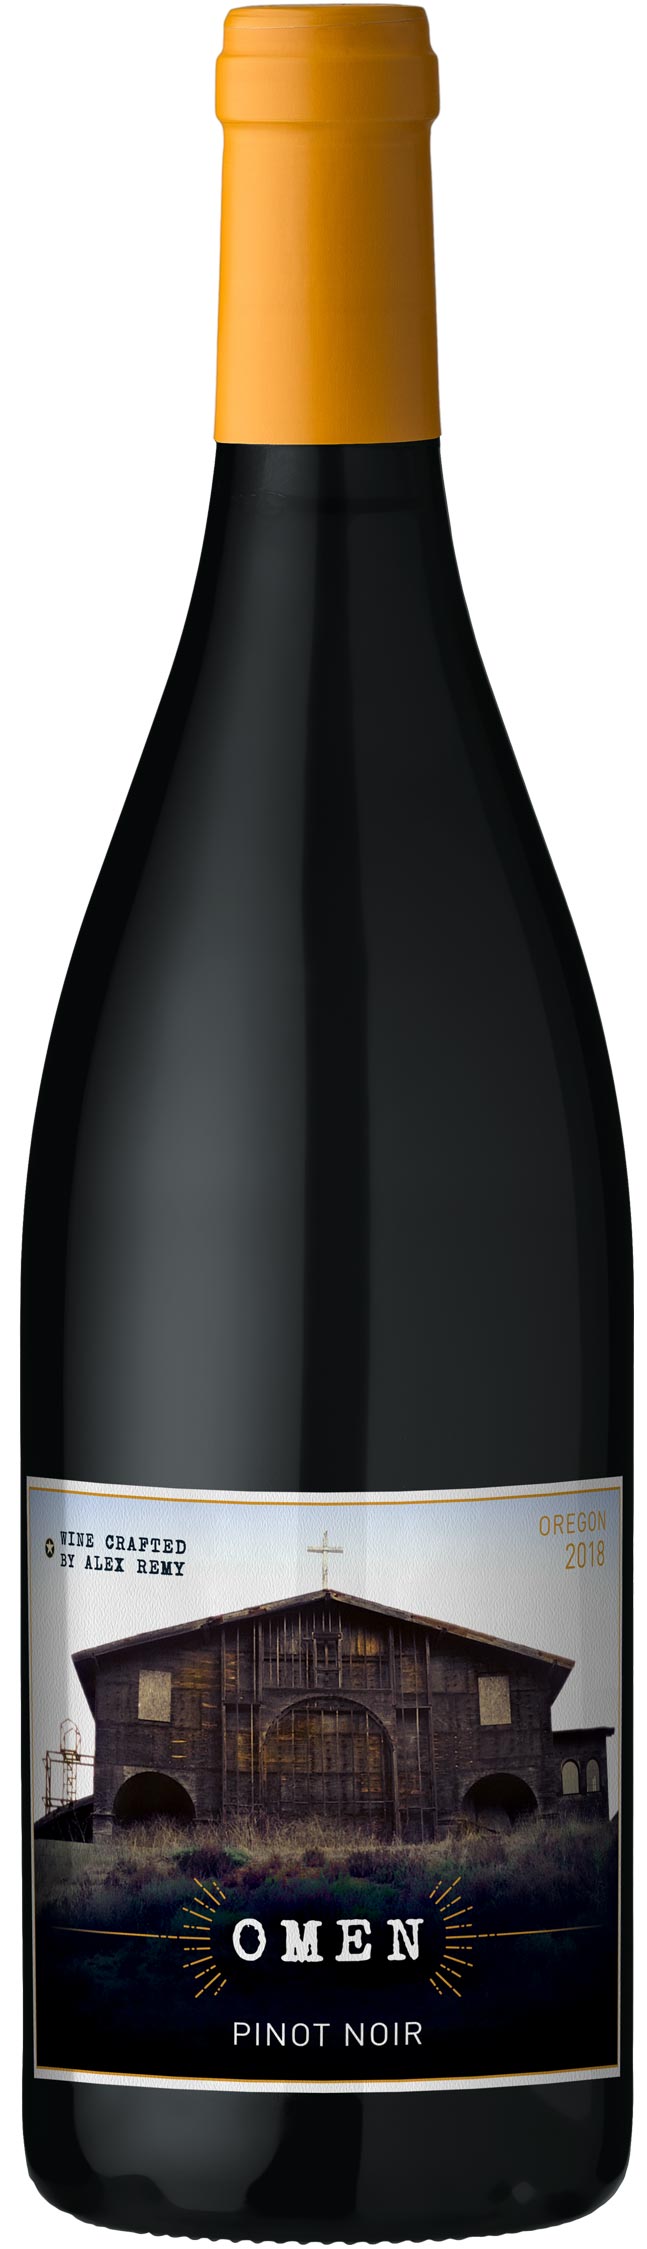 Omen Oregon Pinot Noir